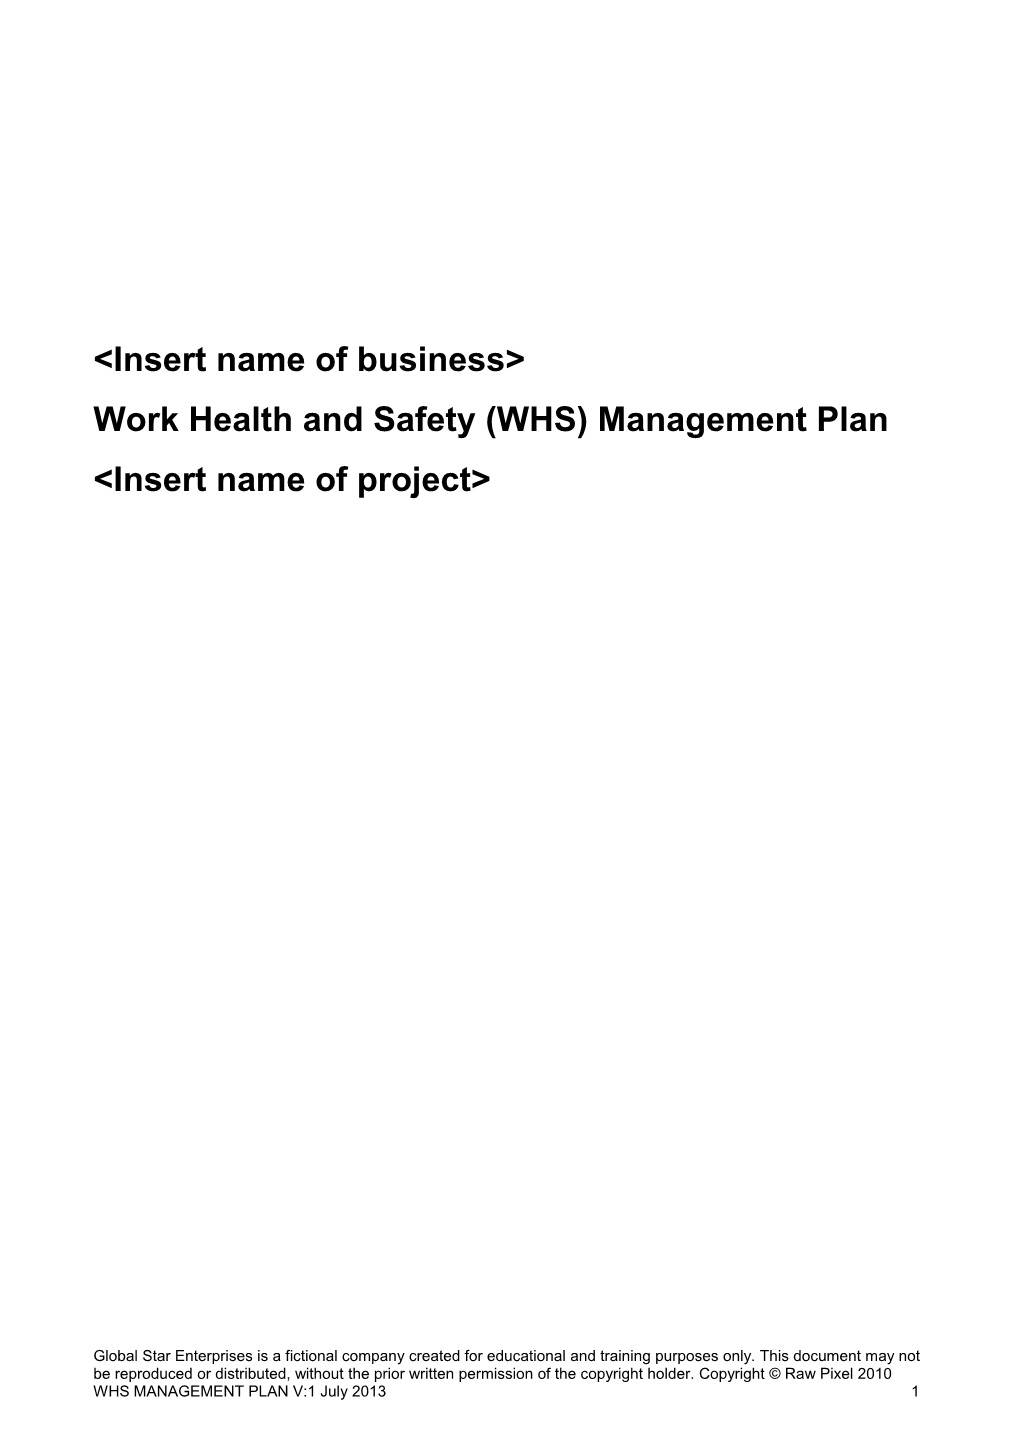 WHS Management Plan Template